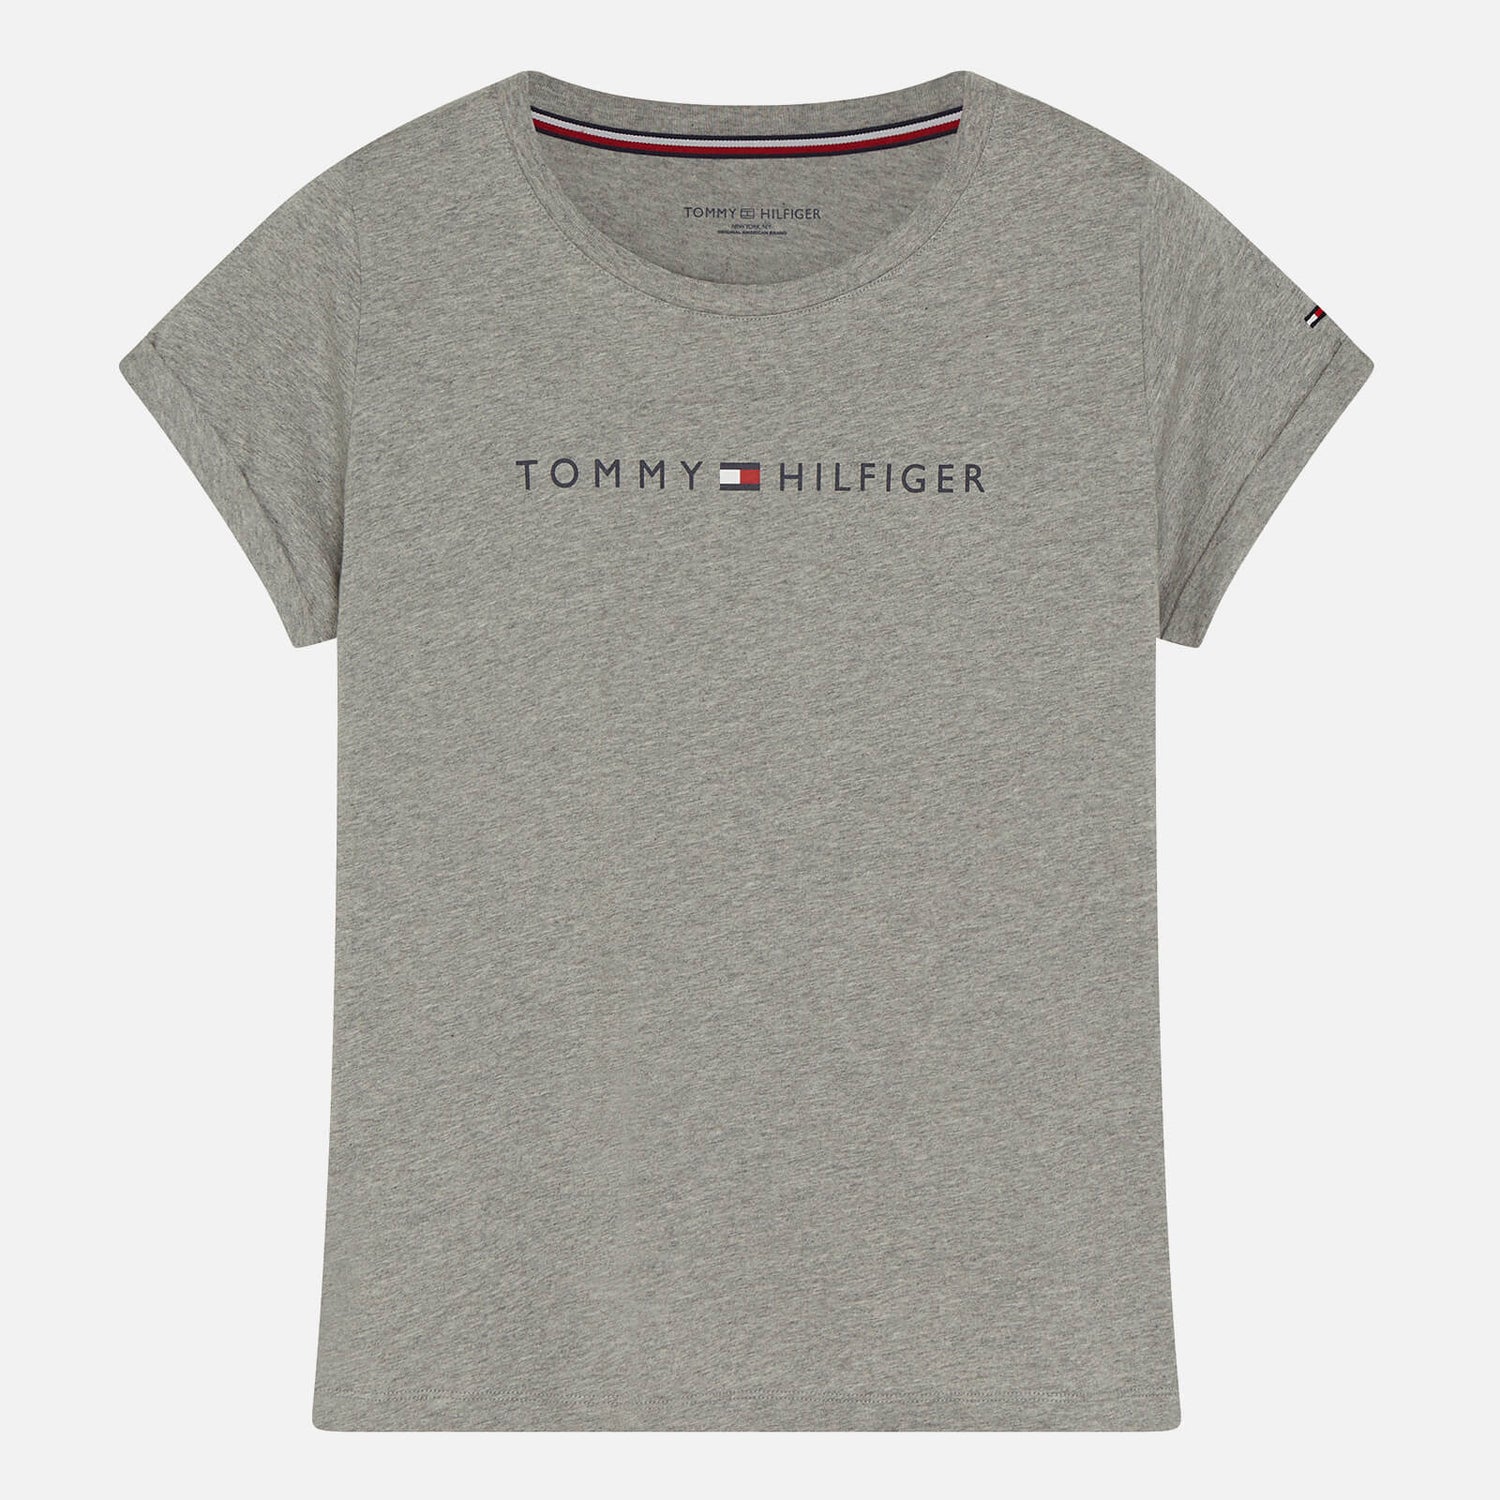 Tommy Hilfiger Women's Tommy Original Short Sleeve T-Shirt - Grey Heather